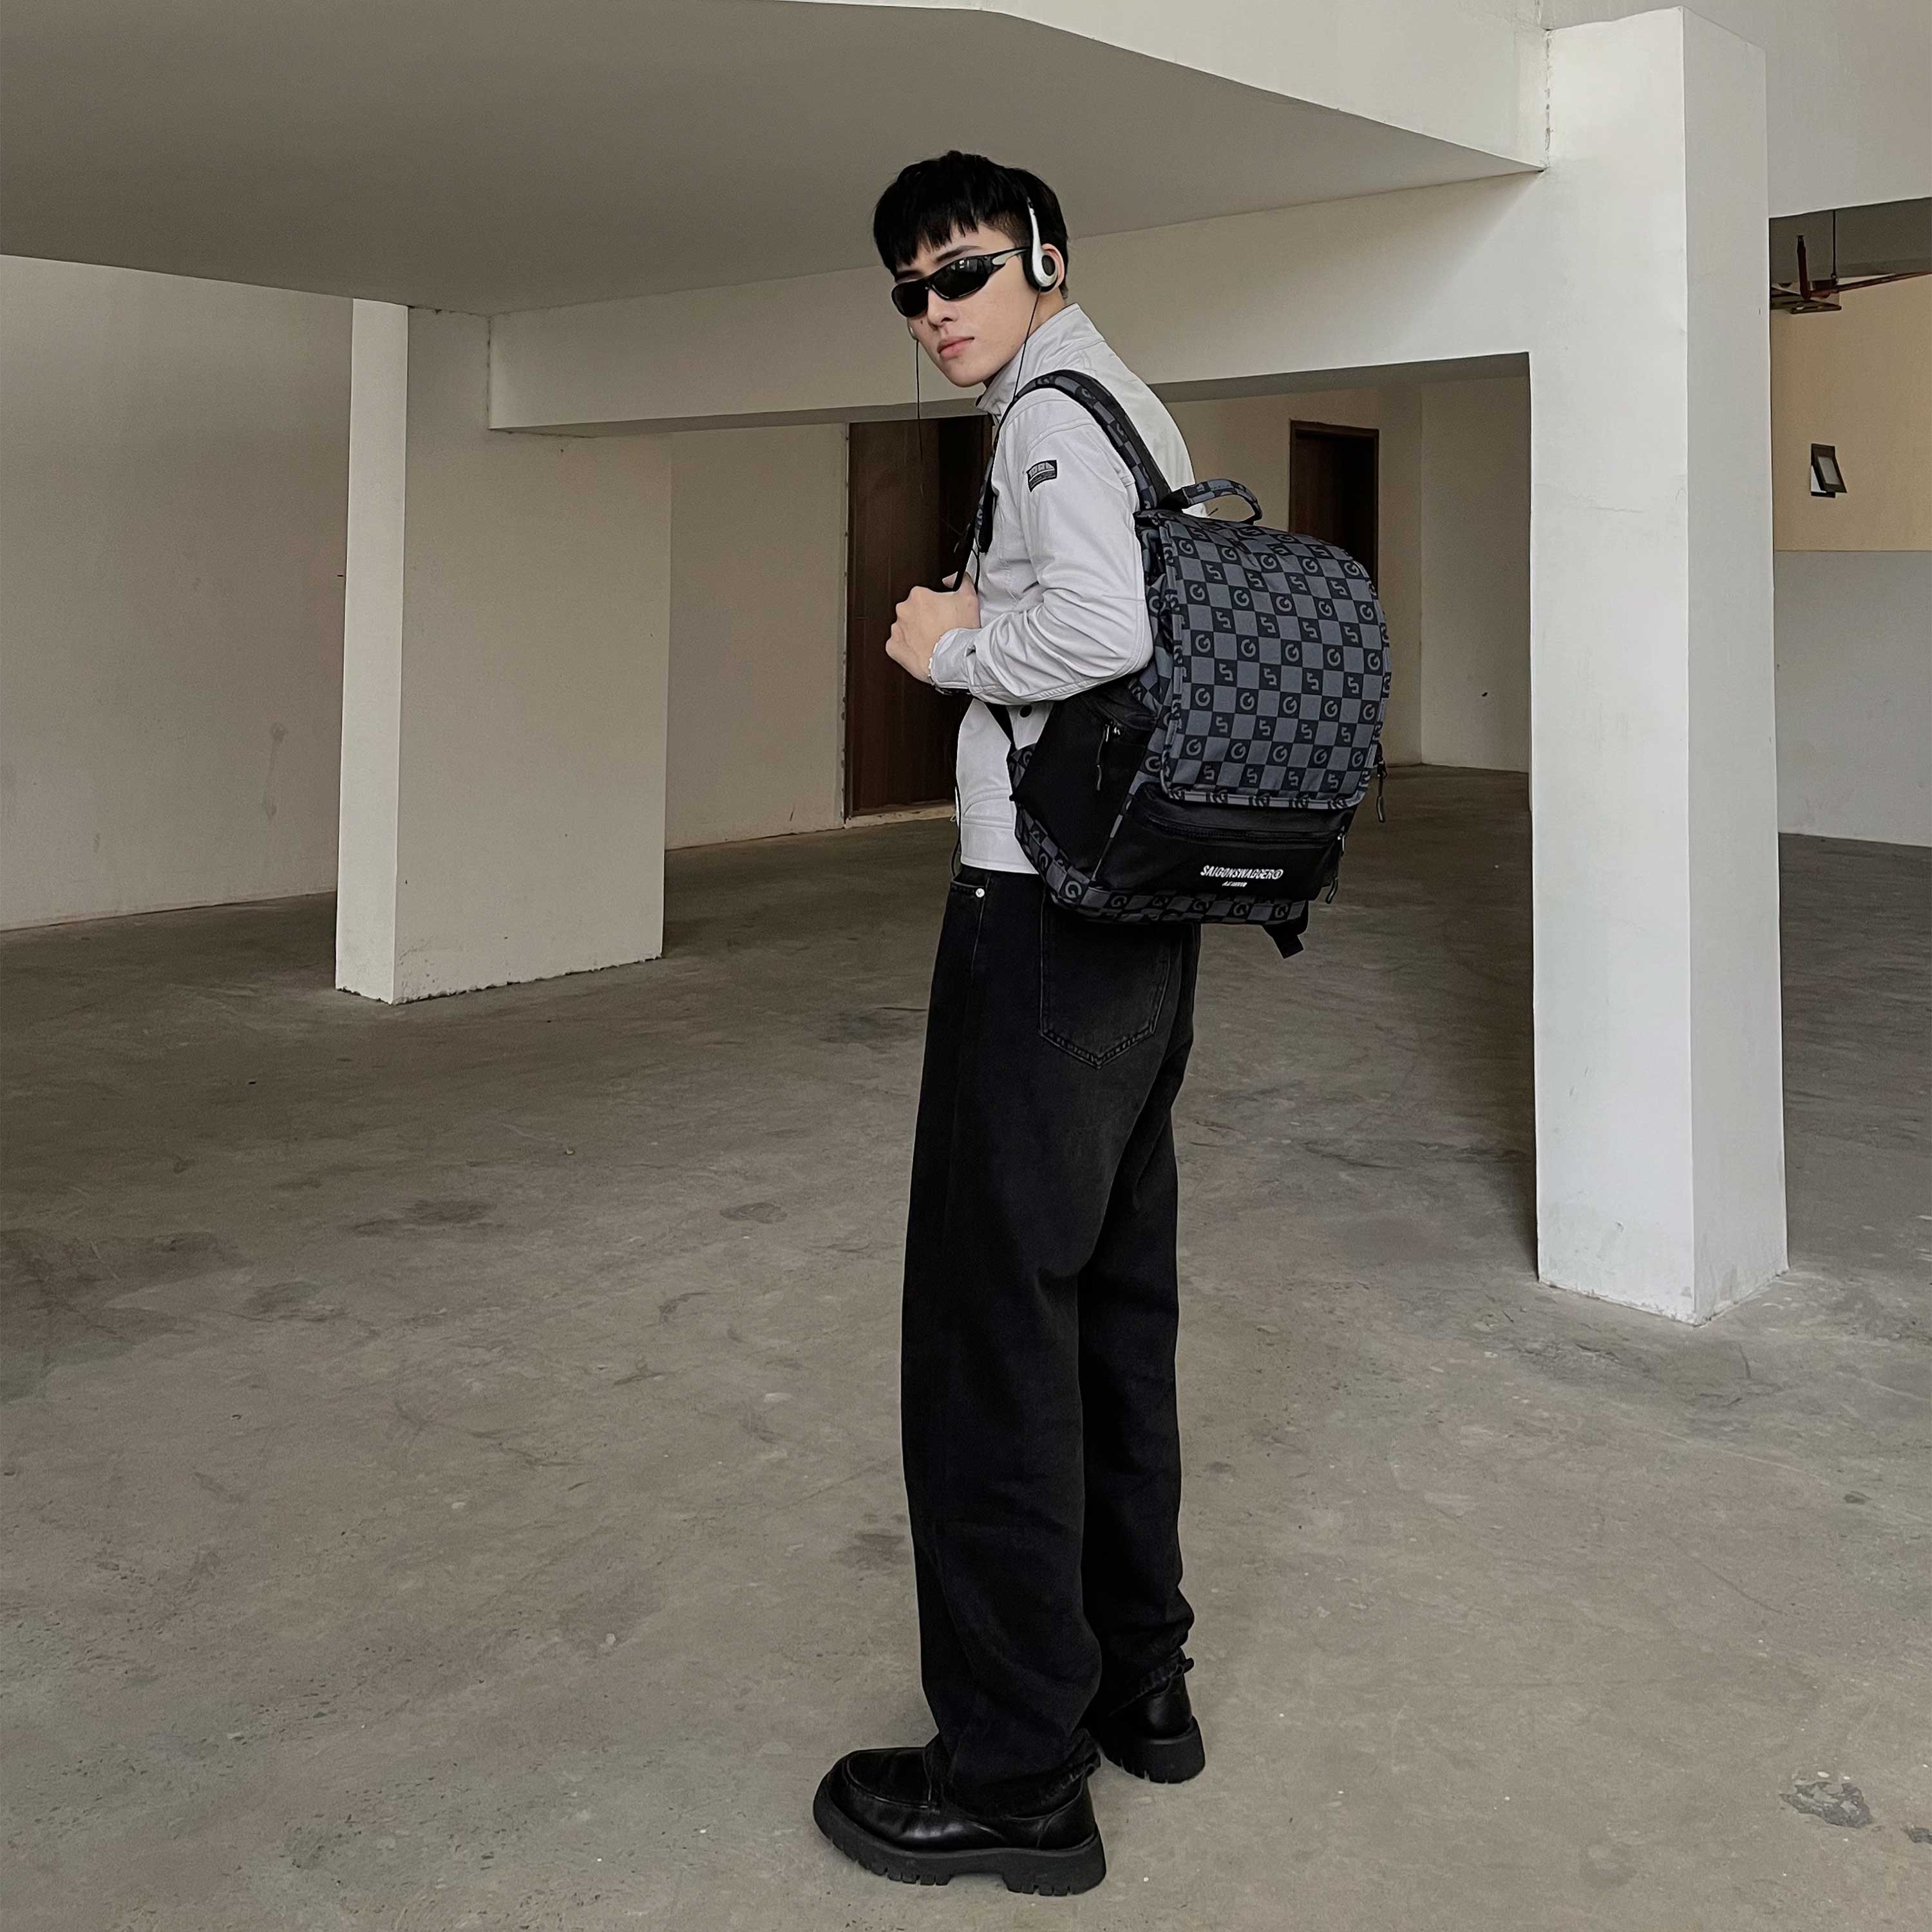 Balo SAIGON SWAGGER Versatile Checked Backpack Ngăn Chống Sốc Lap 16inch